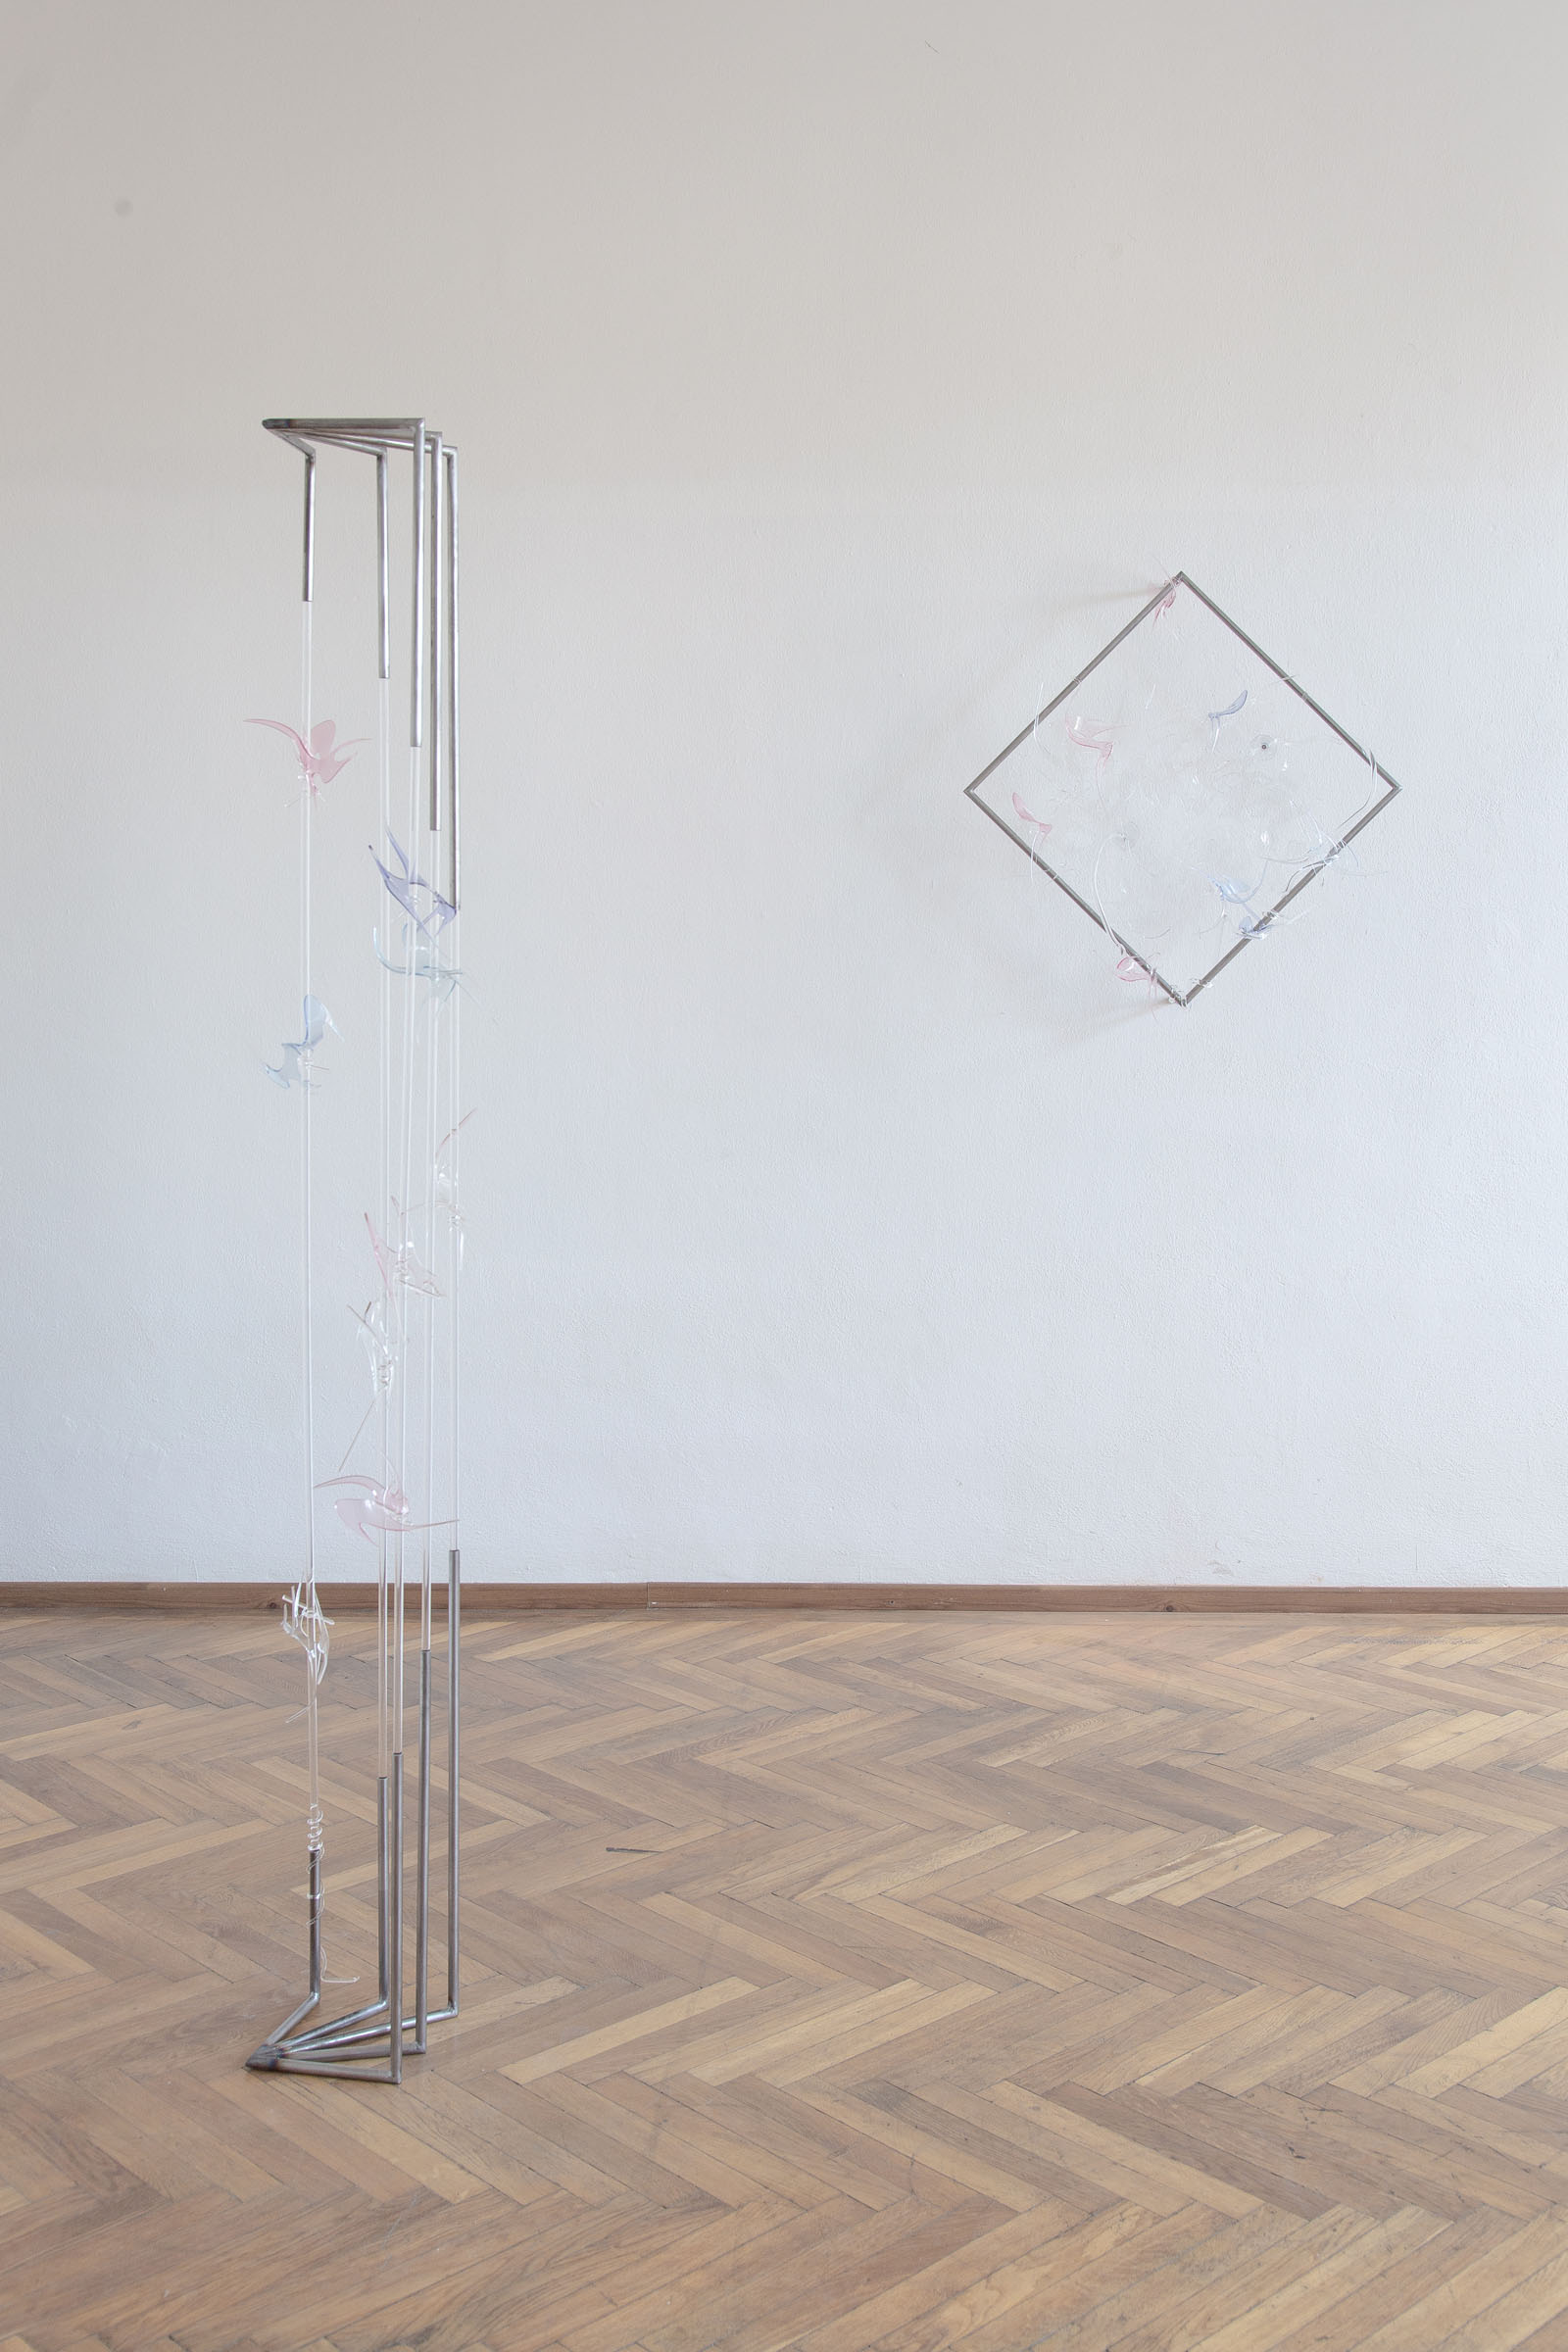 Exoskin series, installation view, My Body Is Your Body Too, VUNU Gallery 2019